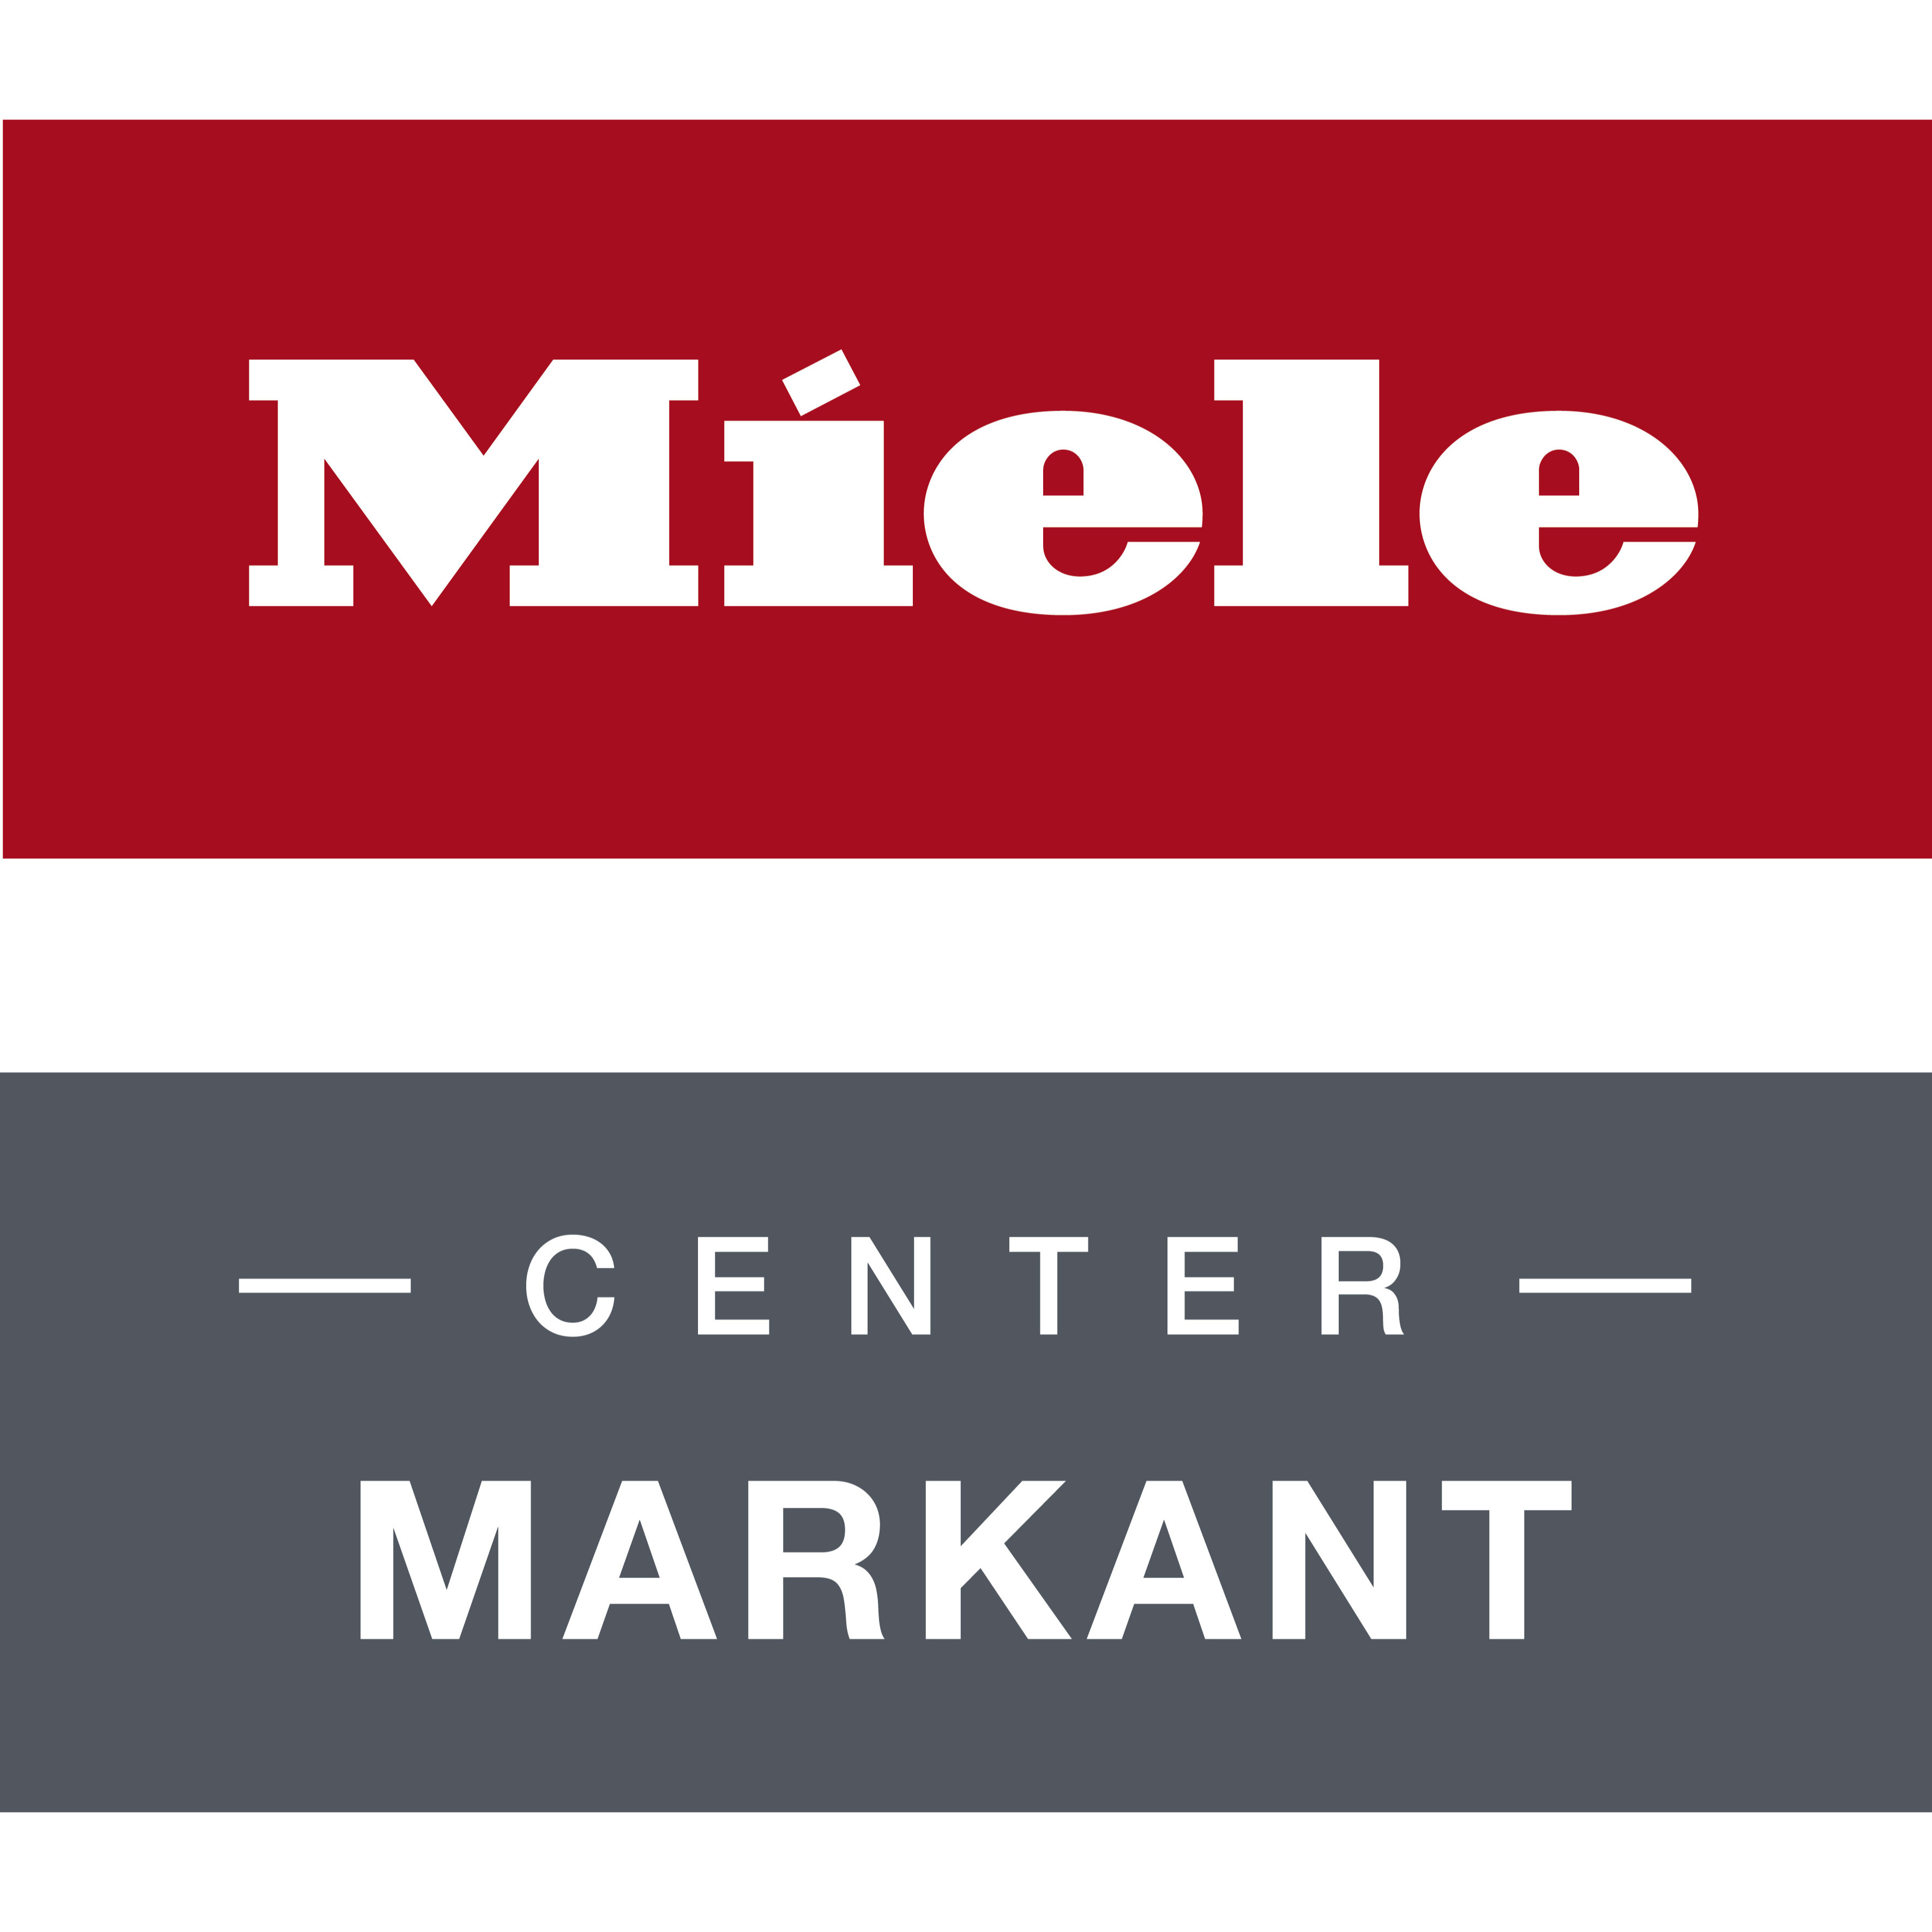 MIELE CENTER MARKANT Logo